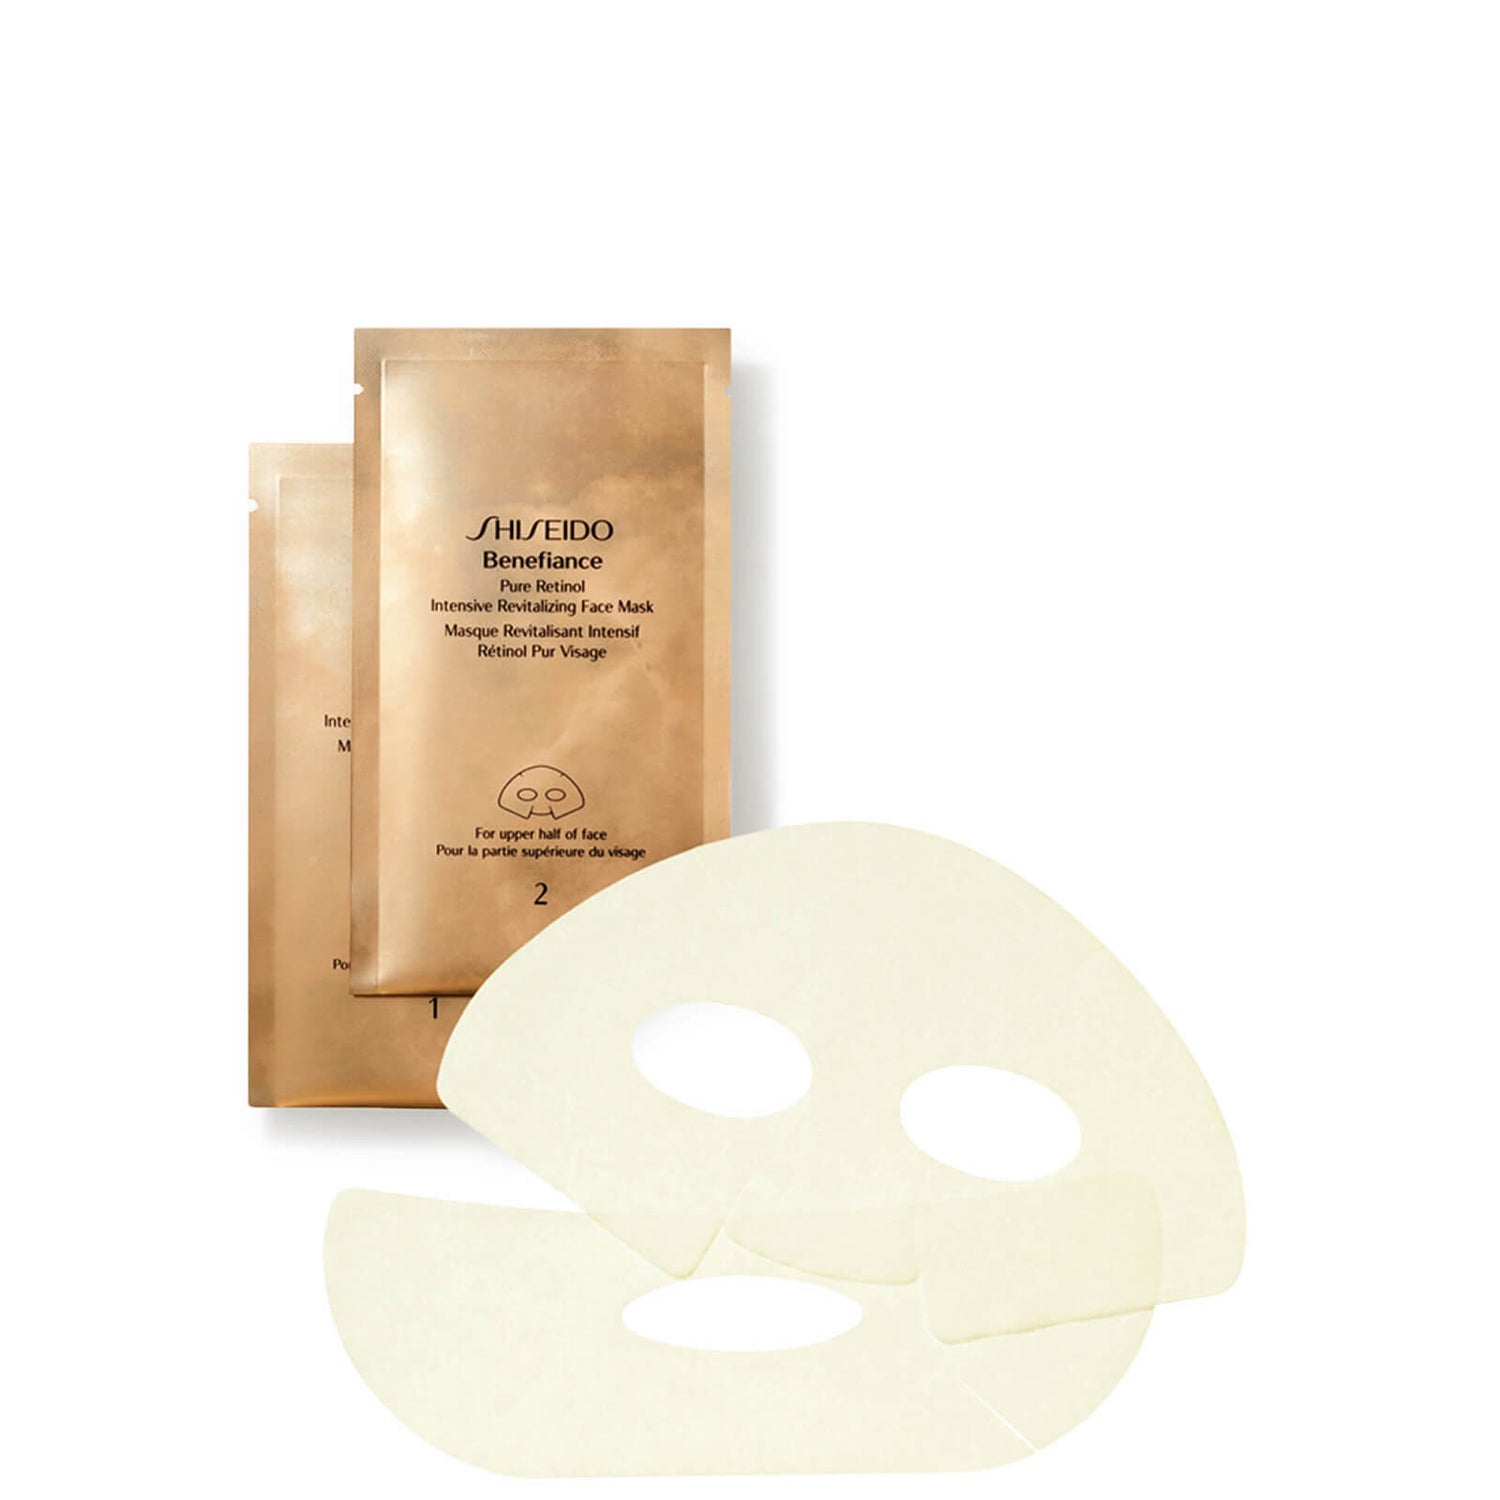 Shiseido Benefiance Pure Retinol Intensive Revitalizing Face Mask x 4 Sachets